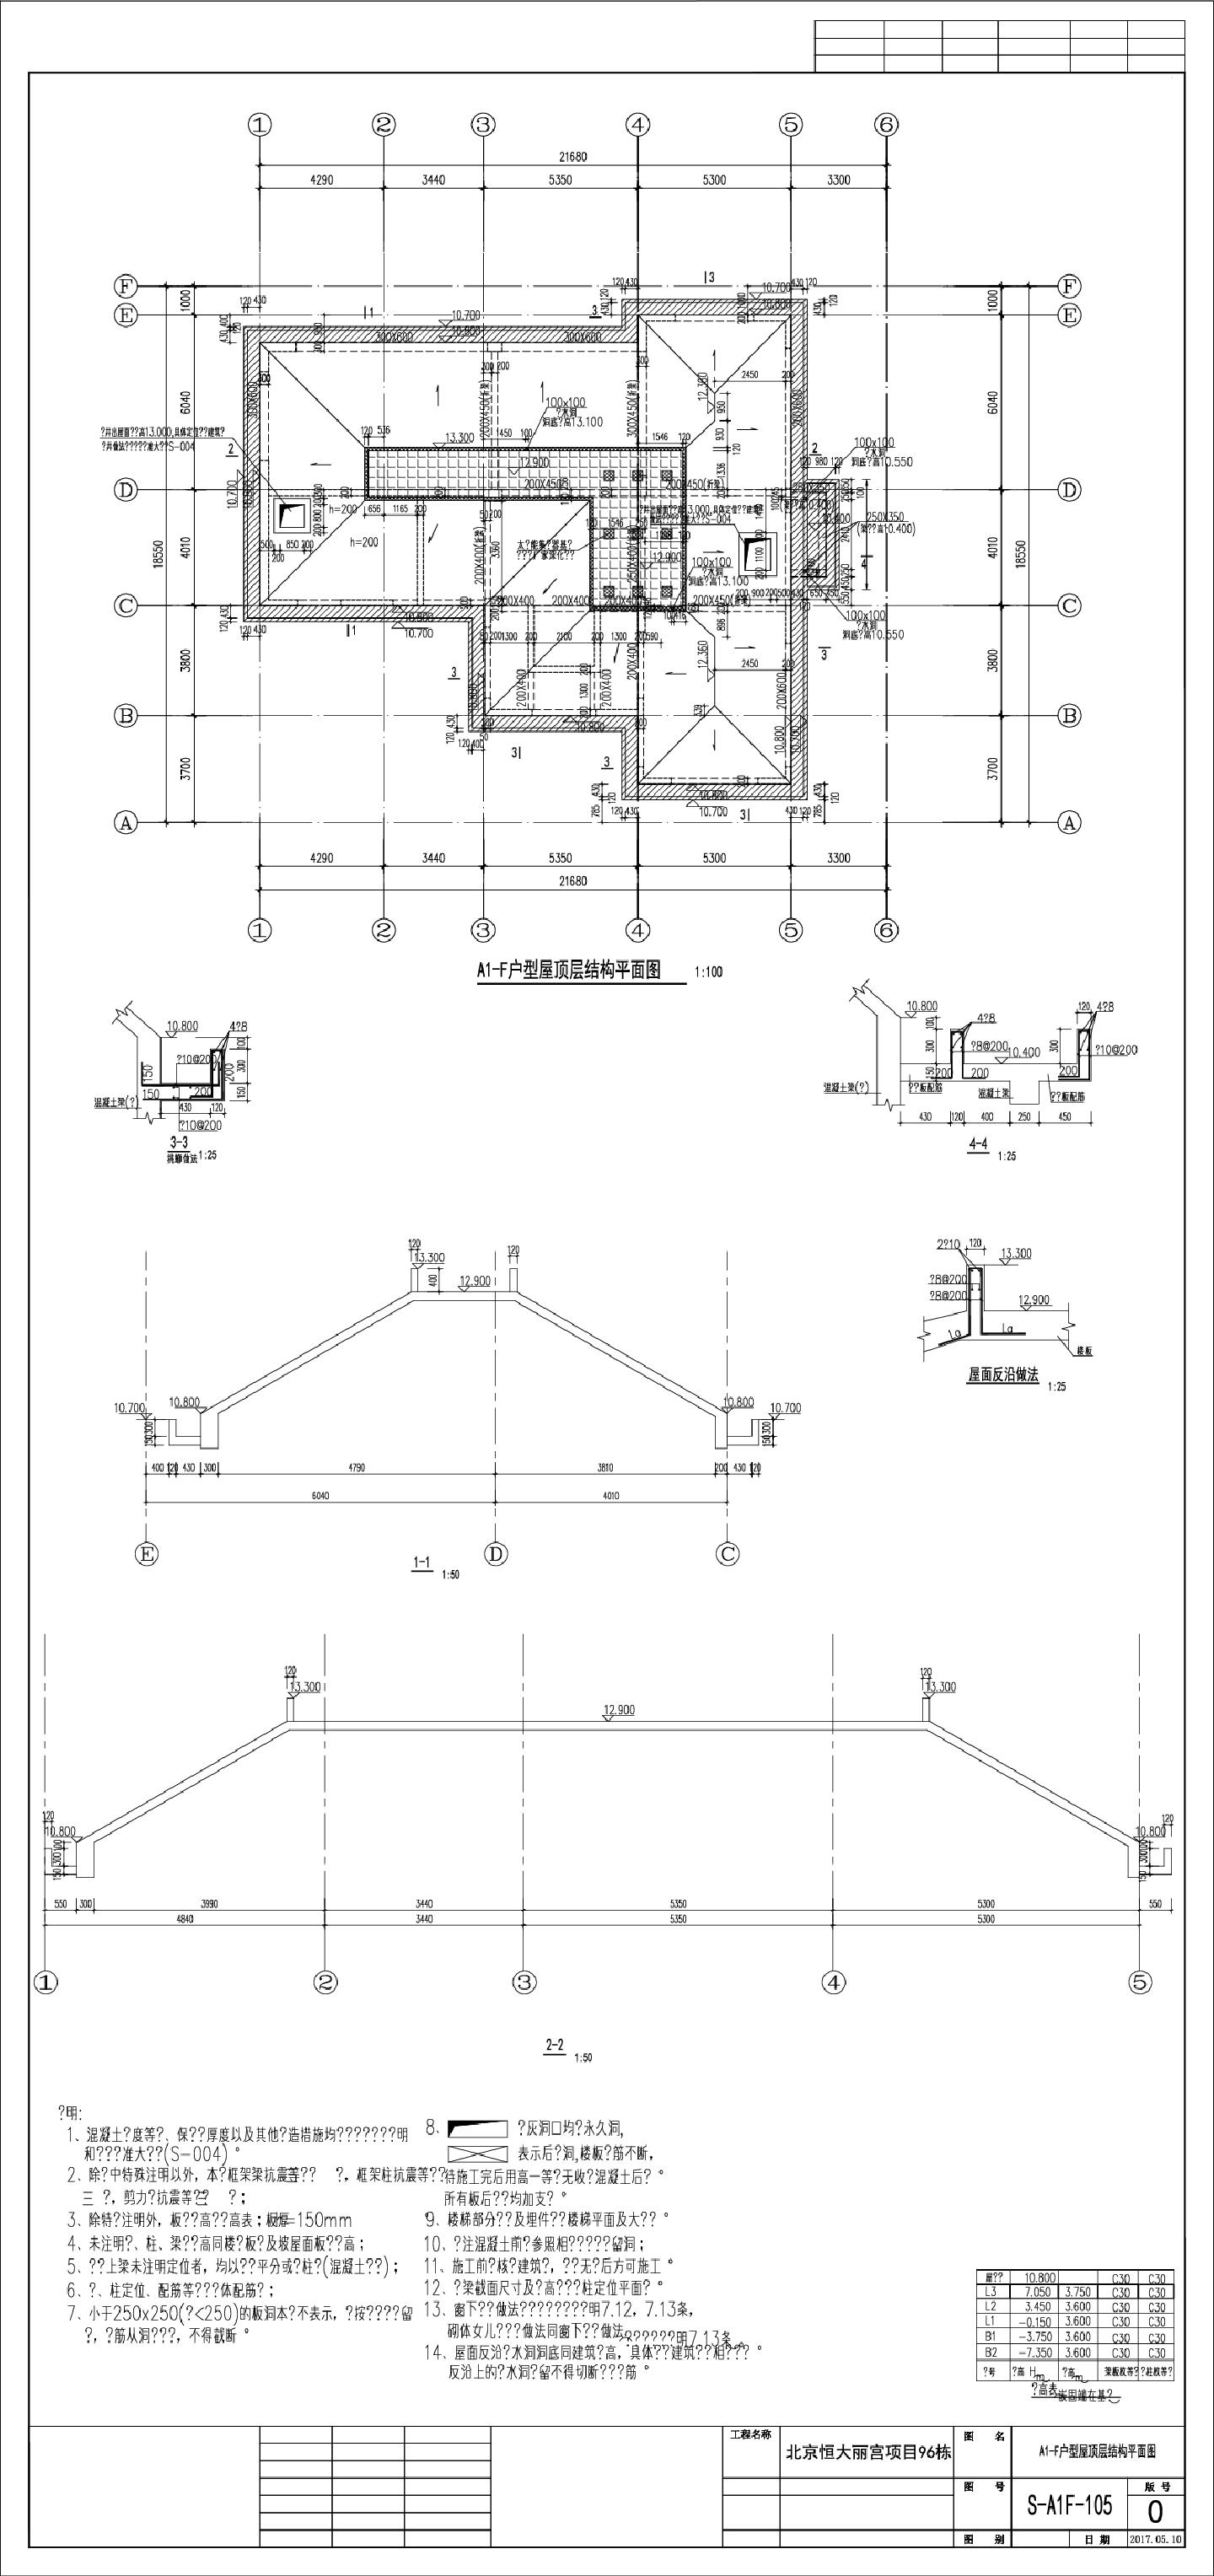 A1-F结构平面图及基础墙柱楼梯图